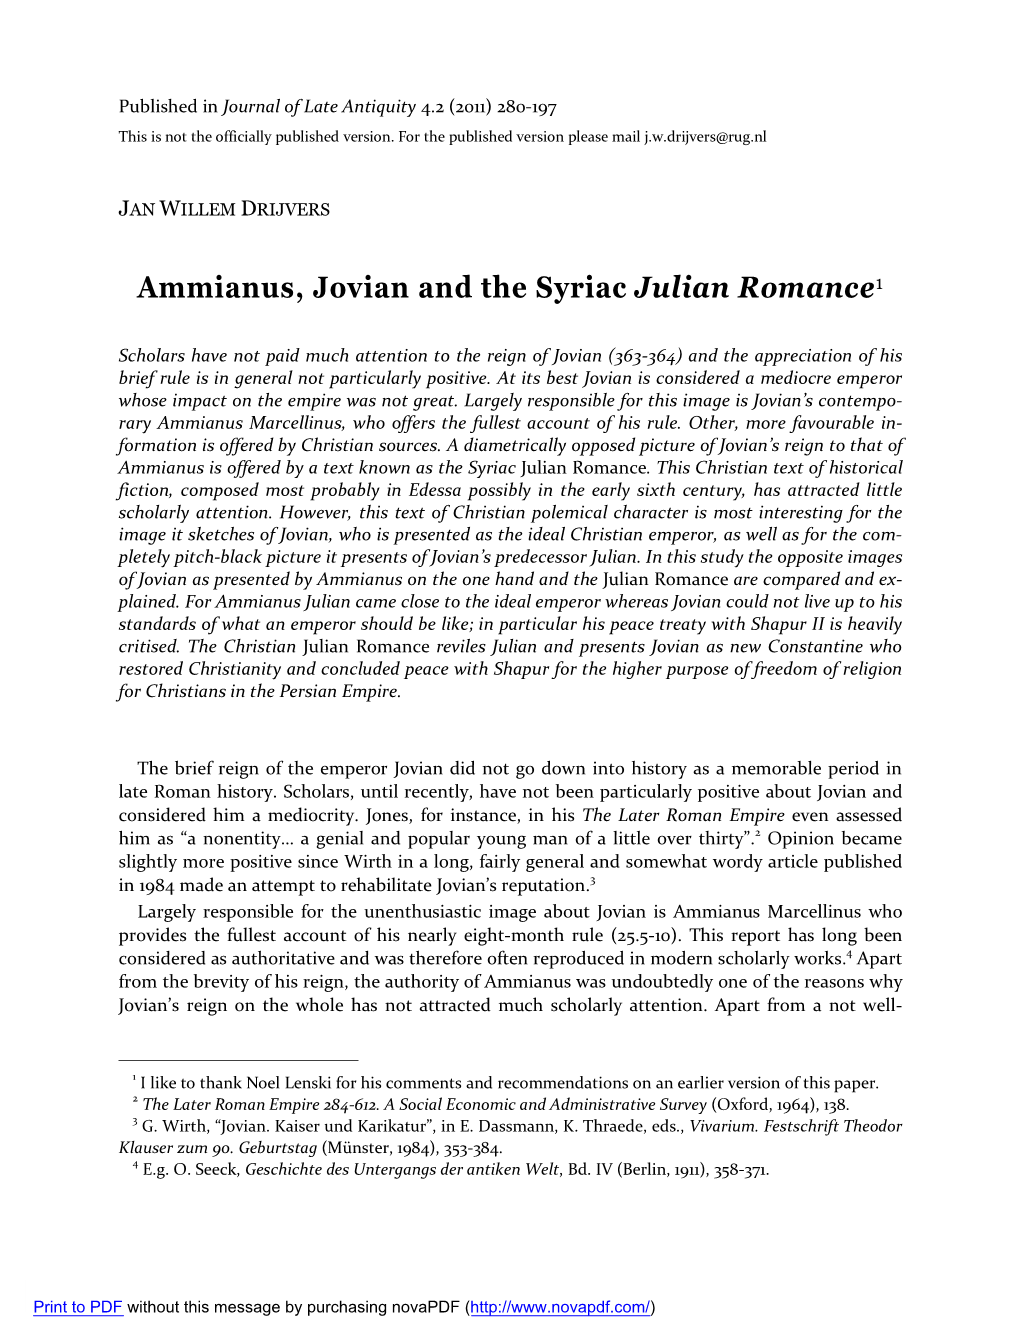 Jovian As New Constantine in the Syriac Julian Romance”, Studia Patristica 45 (Louvain, 2010), 229-233; Ph